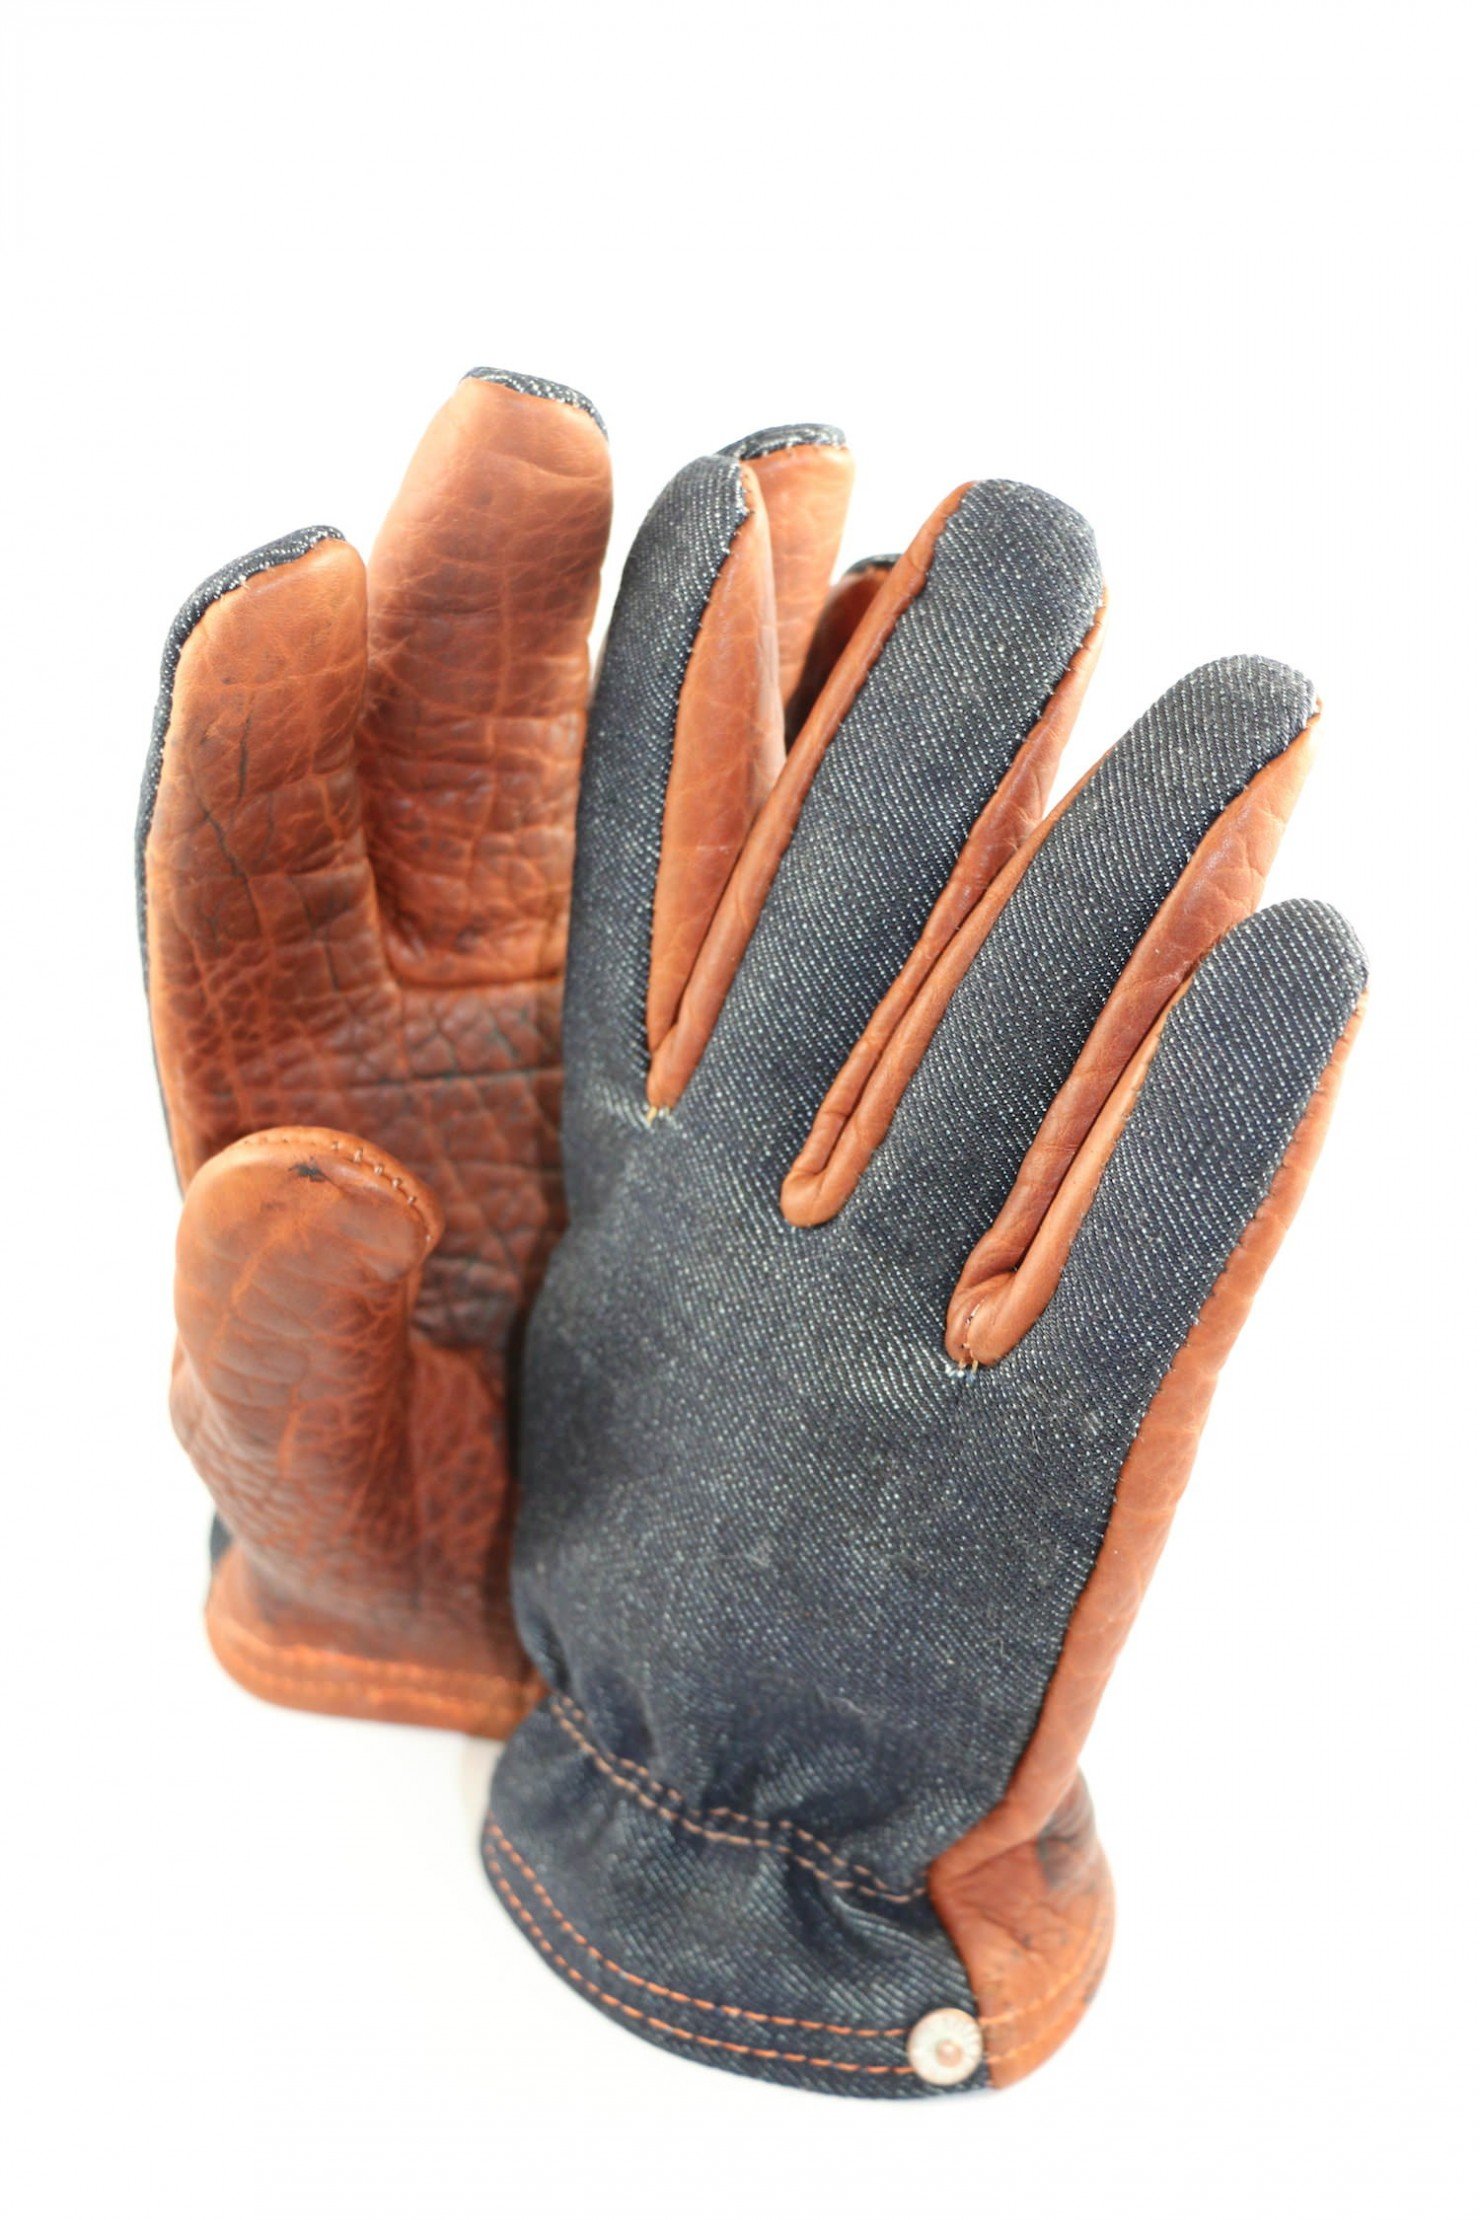 denim gloves